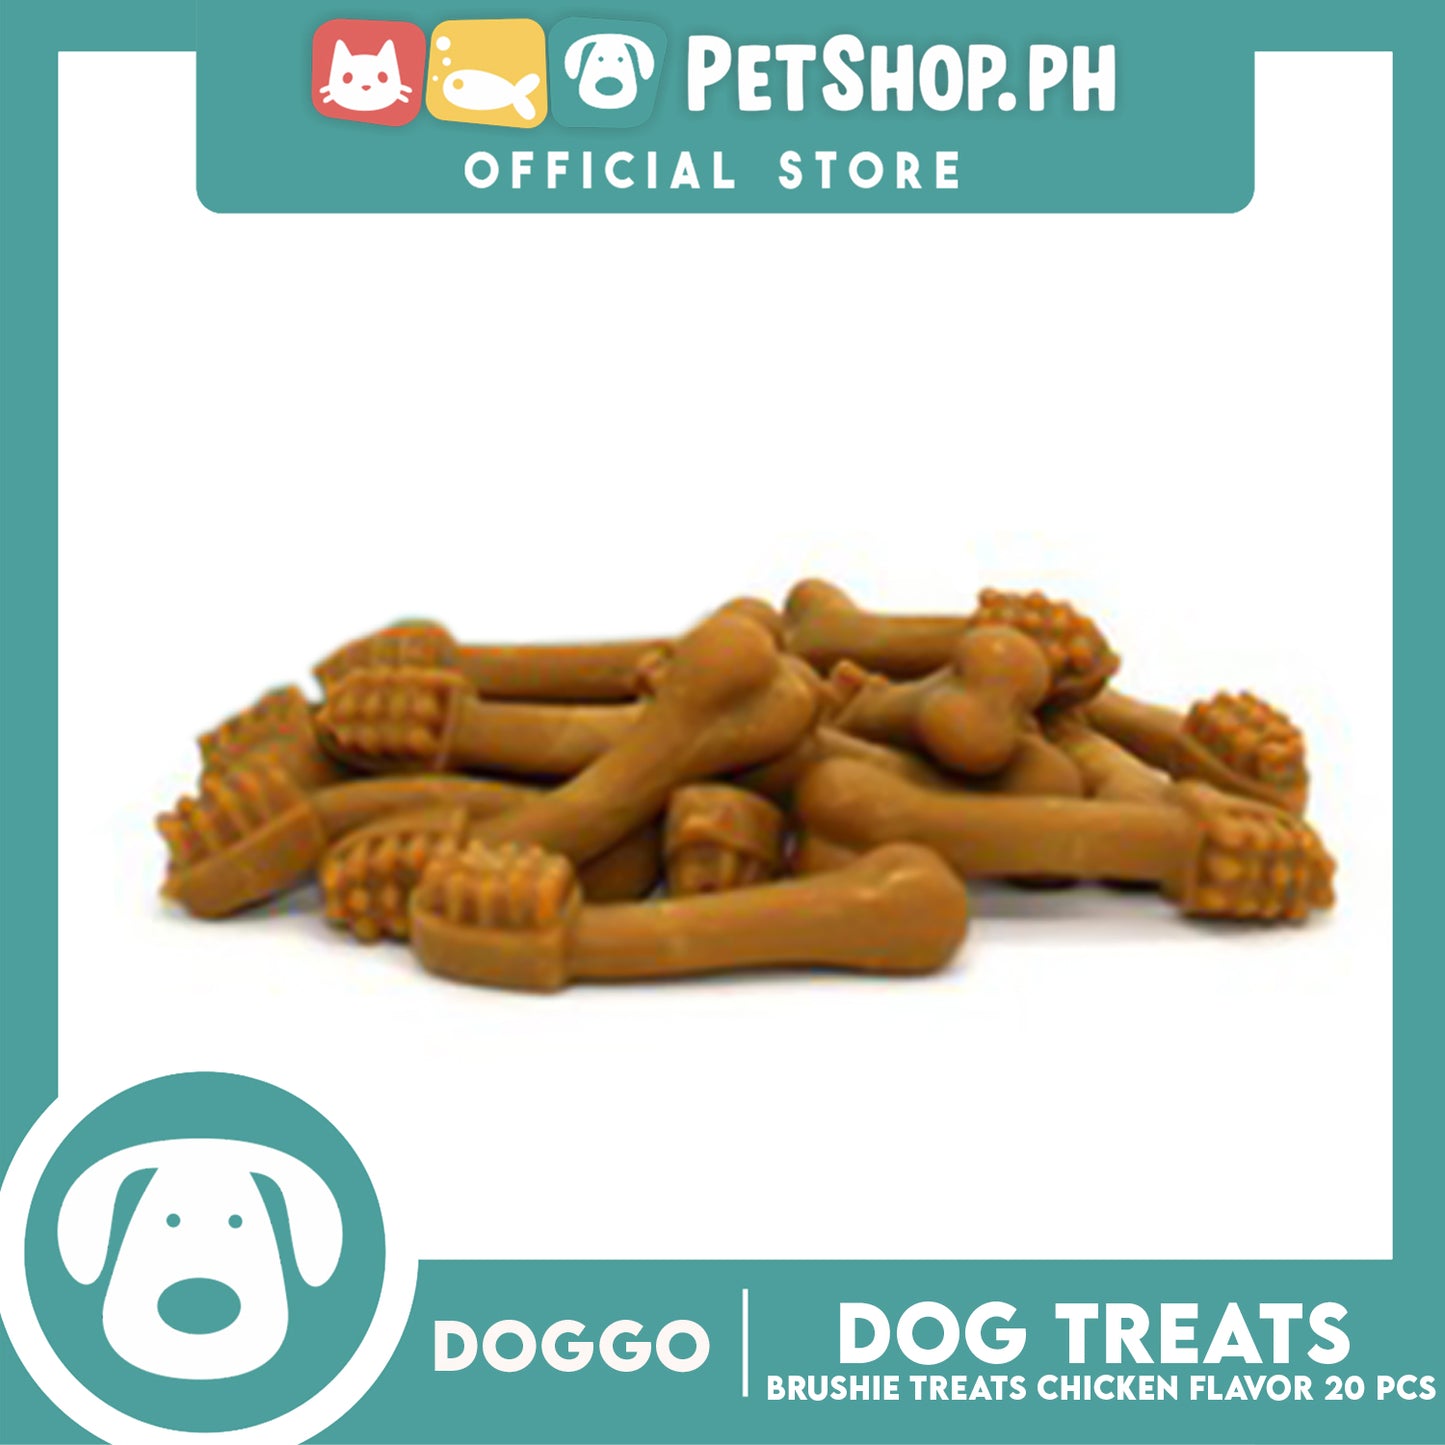 Doggo Dog Brushie Treats 160 grams, 20 pcs. (Chicken Flavor) Brushie Treats for Your Dog